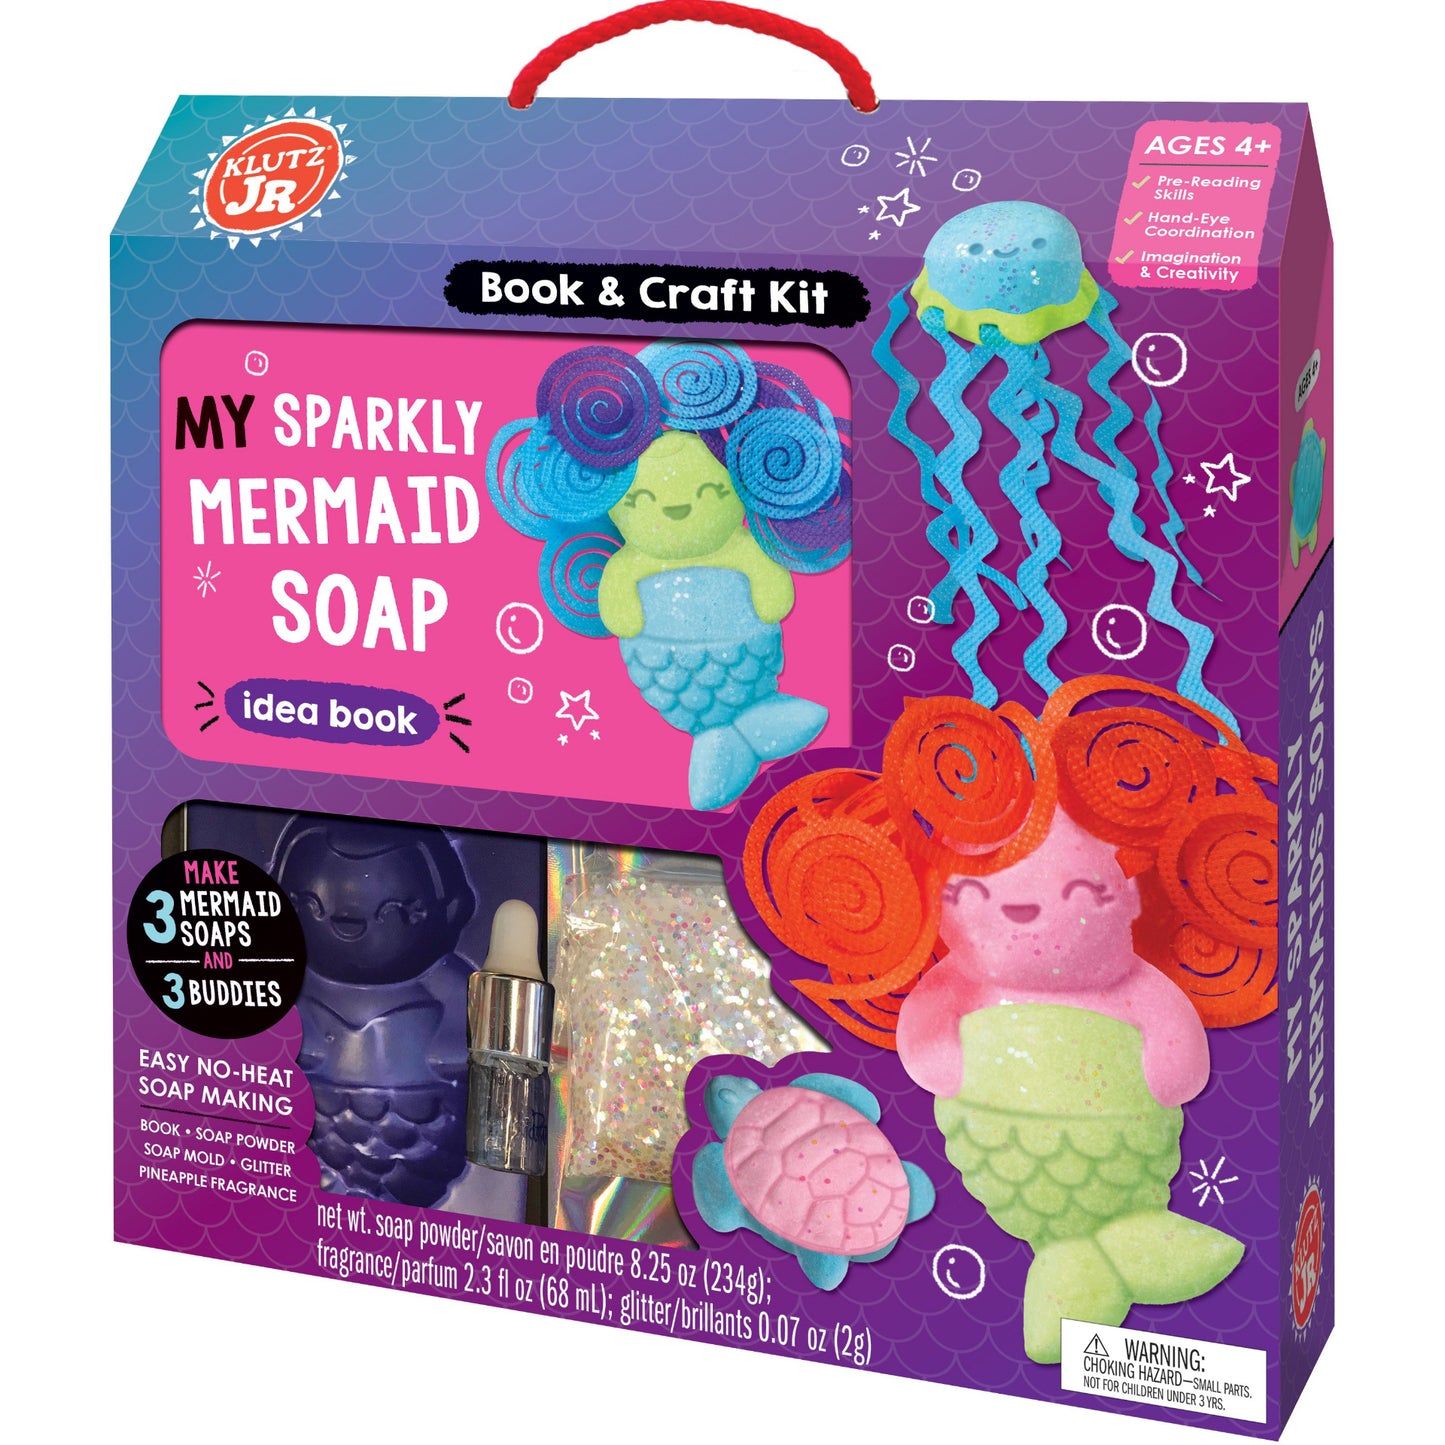 My Sparkly Mermaid Soap